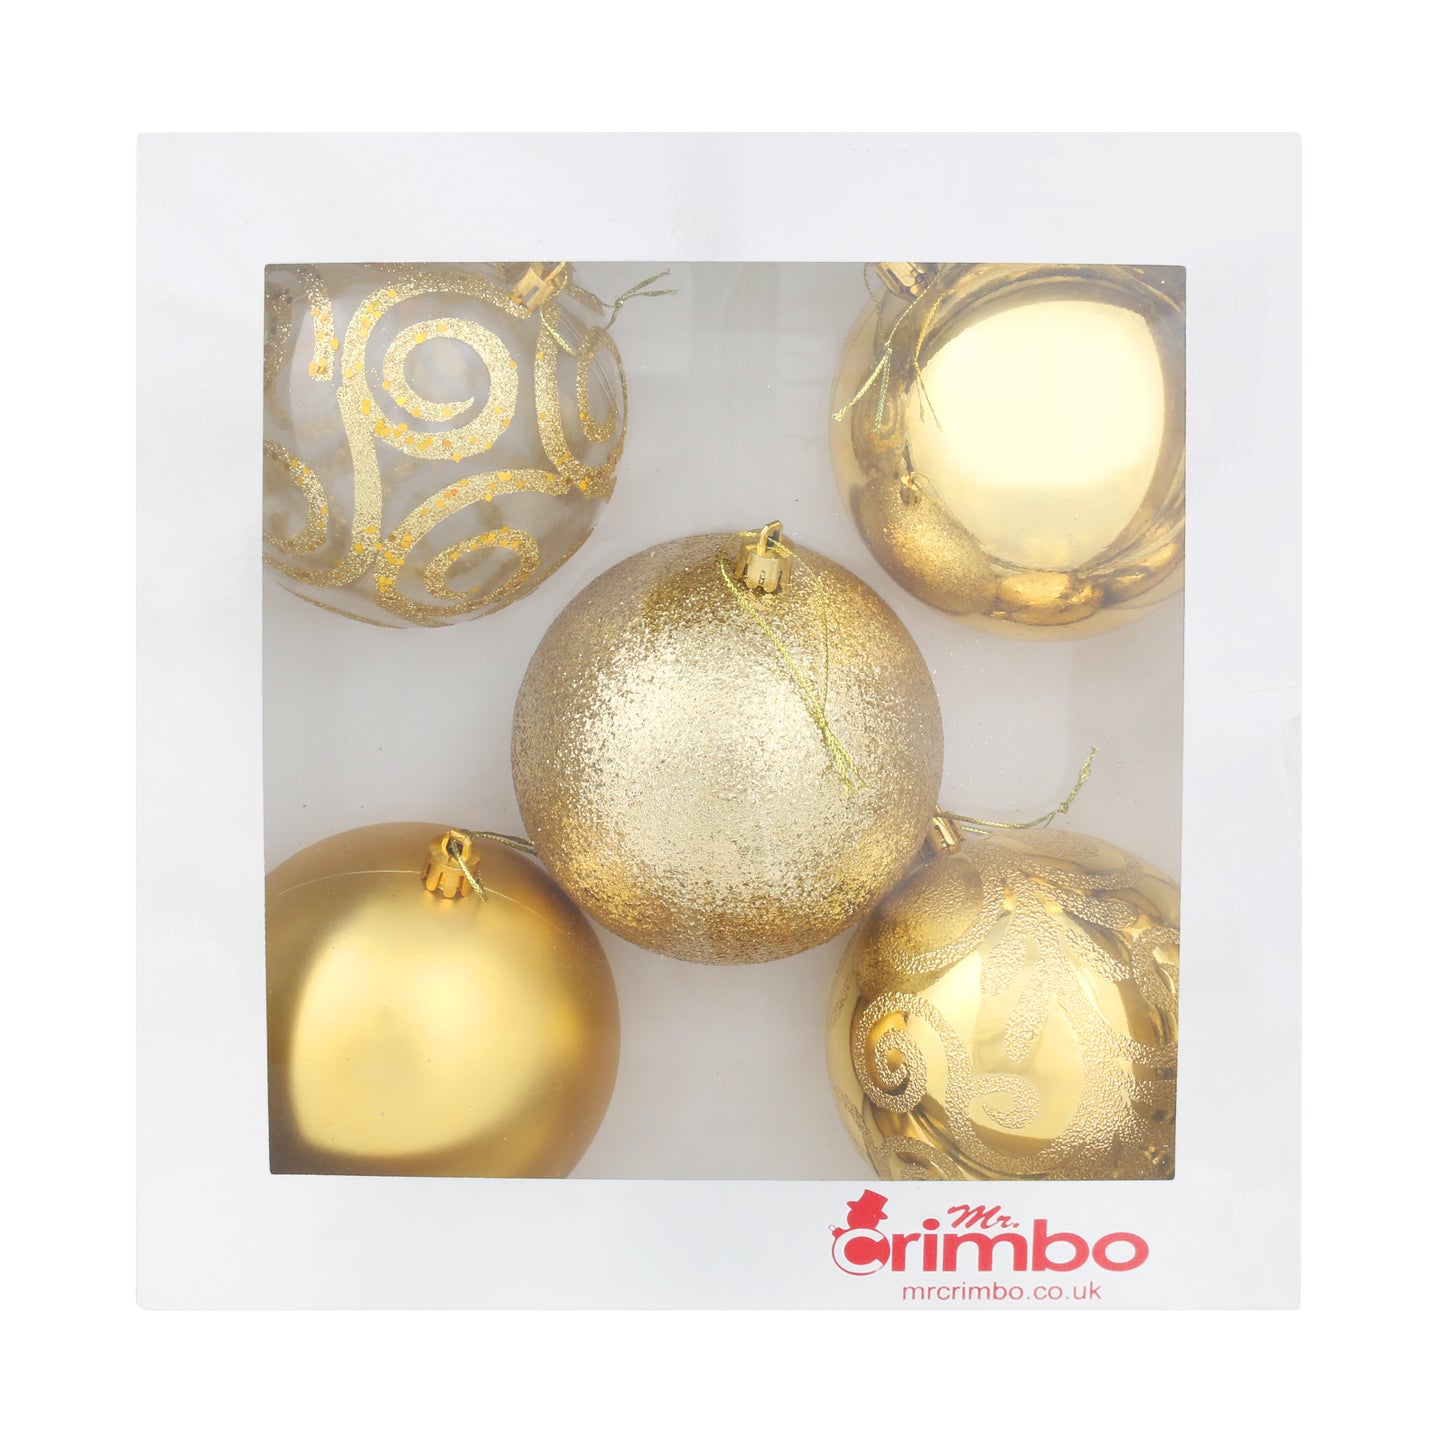 Mr Crimbo 5 x 10cm Christmas Tree Baubles Various Colours - MrCrimbo.co.uk -XS5689 - Gold -Baubles